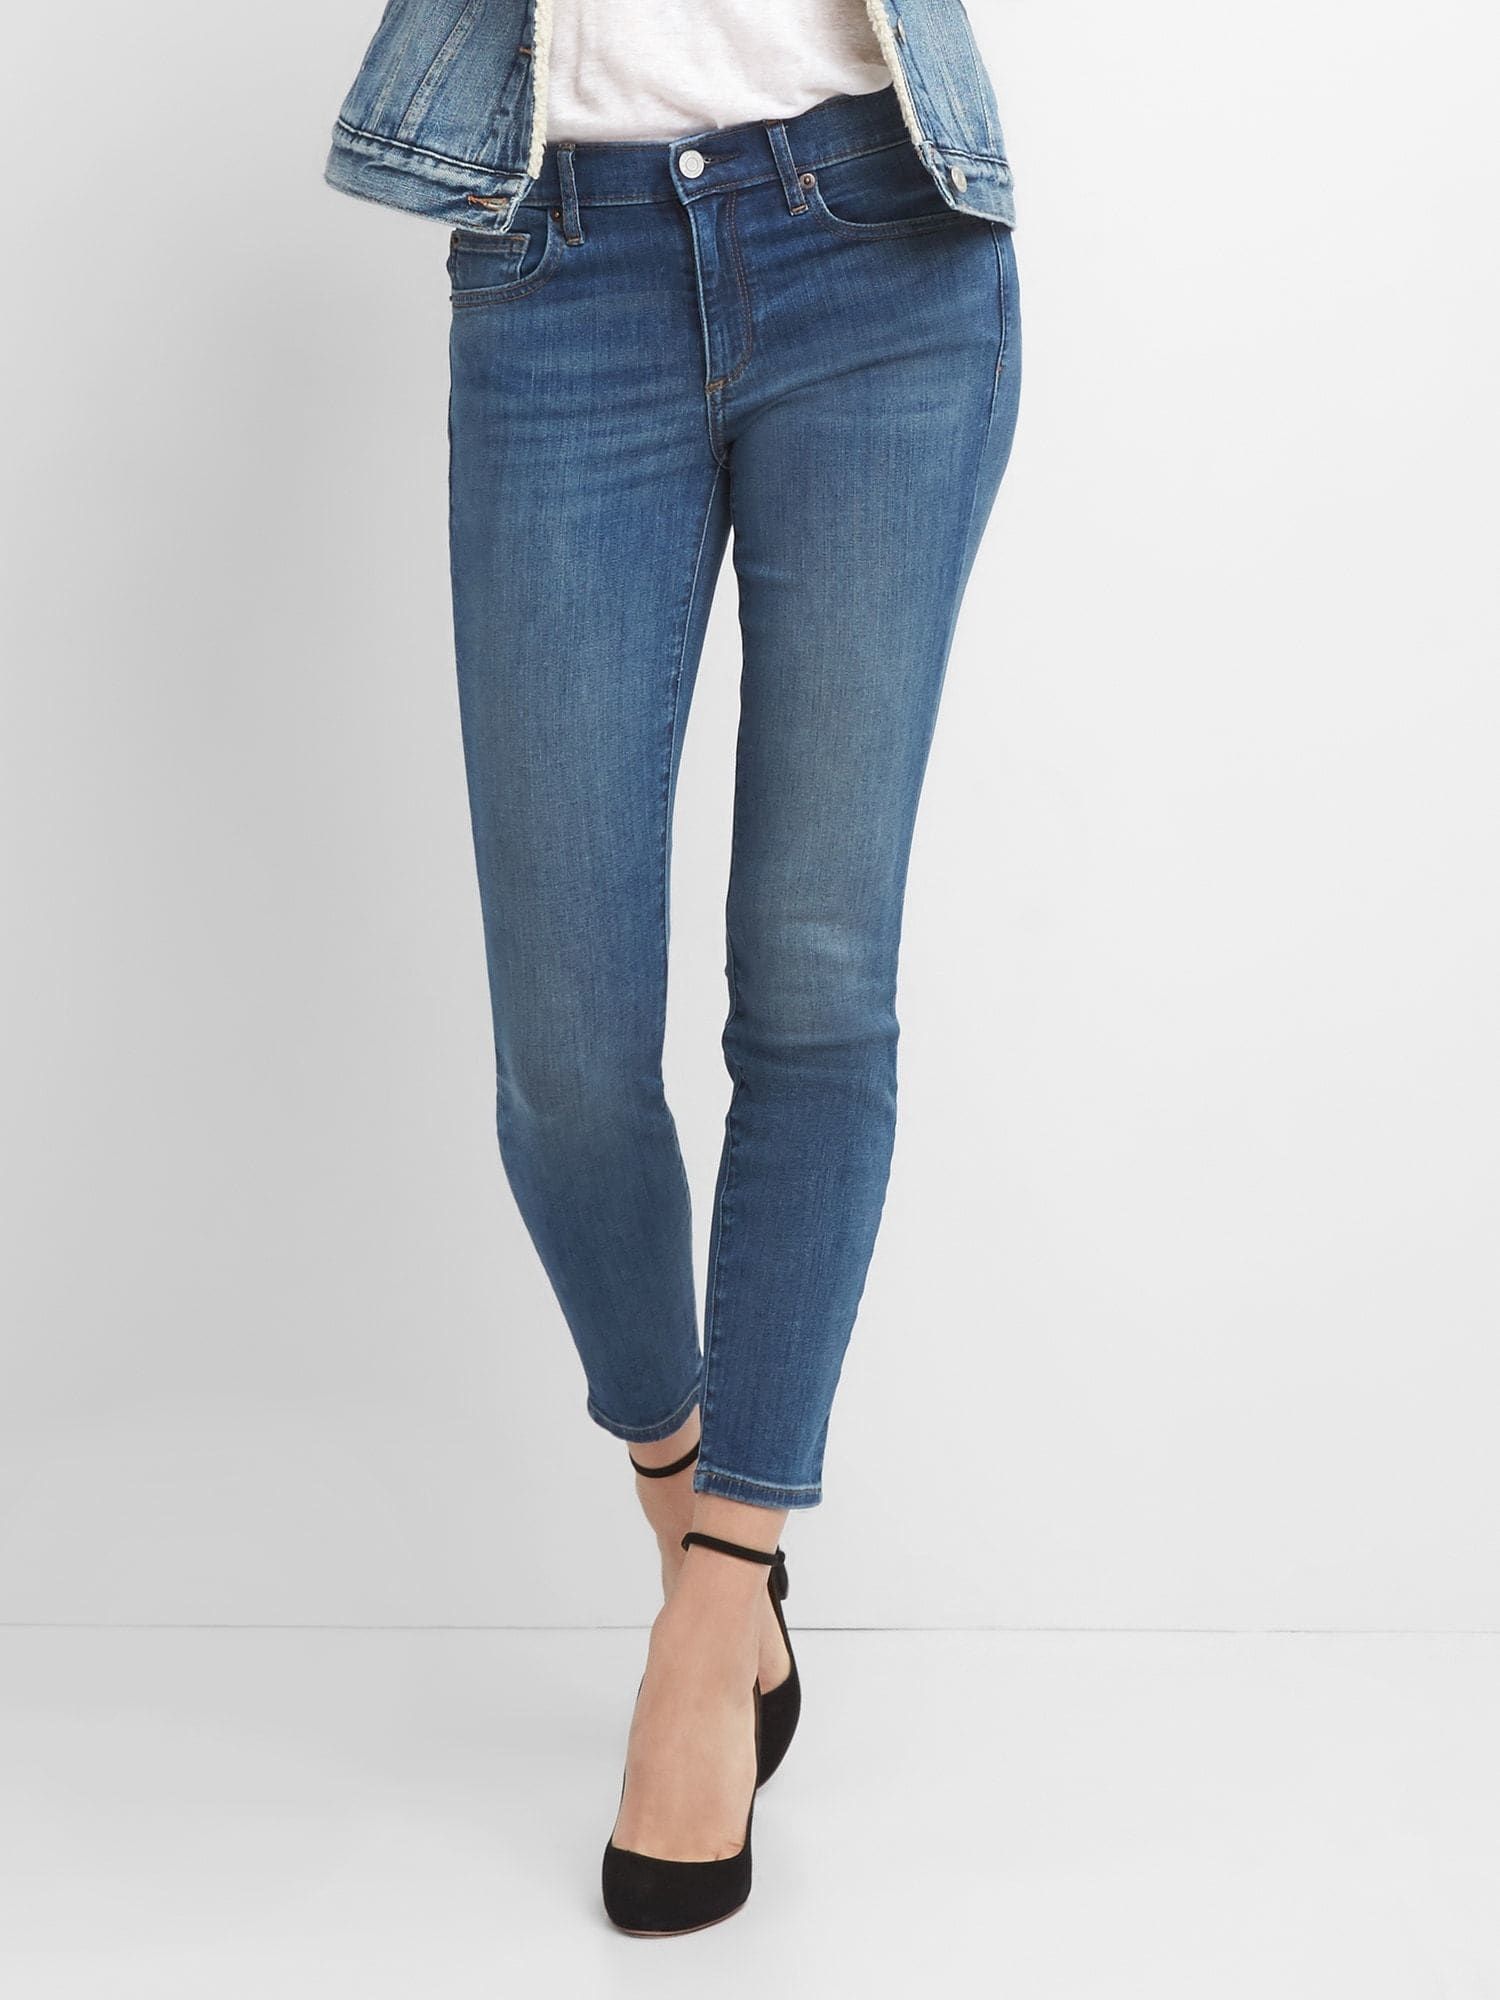 m&s mid rise super skinny jeans